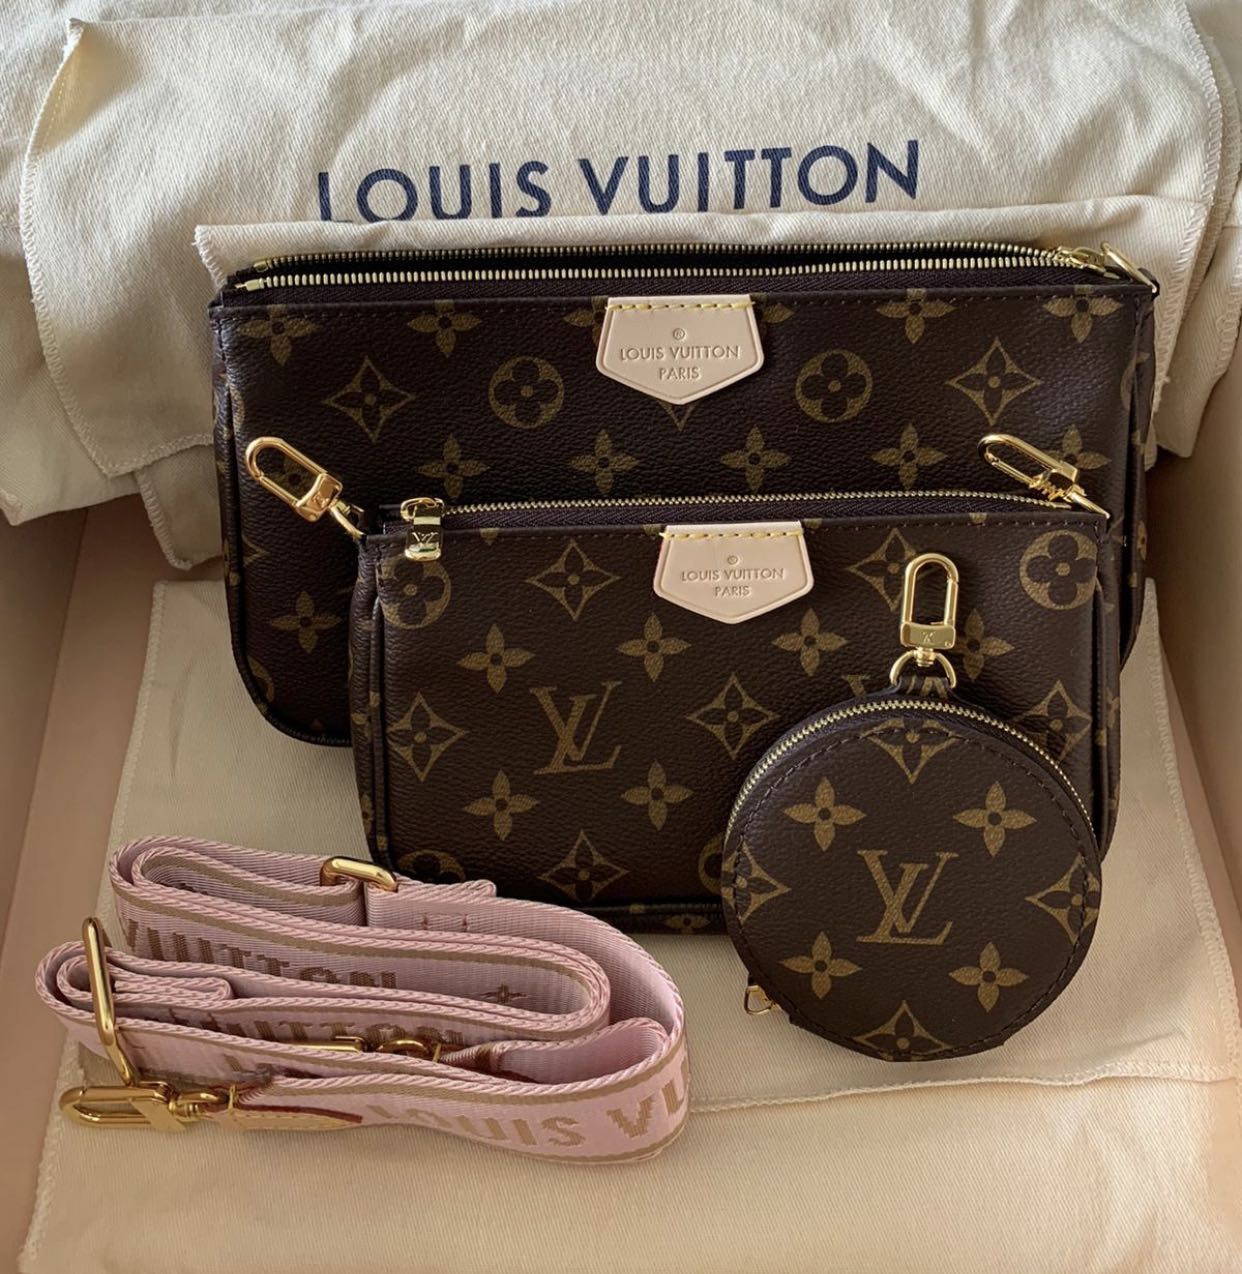 Louis Vuitton X Supreme FOR SALE! - PicClick